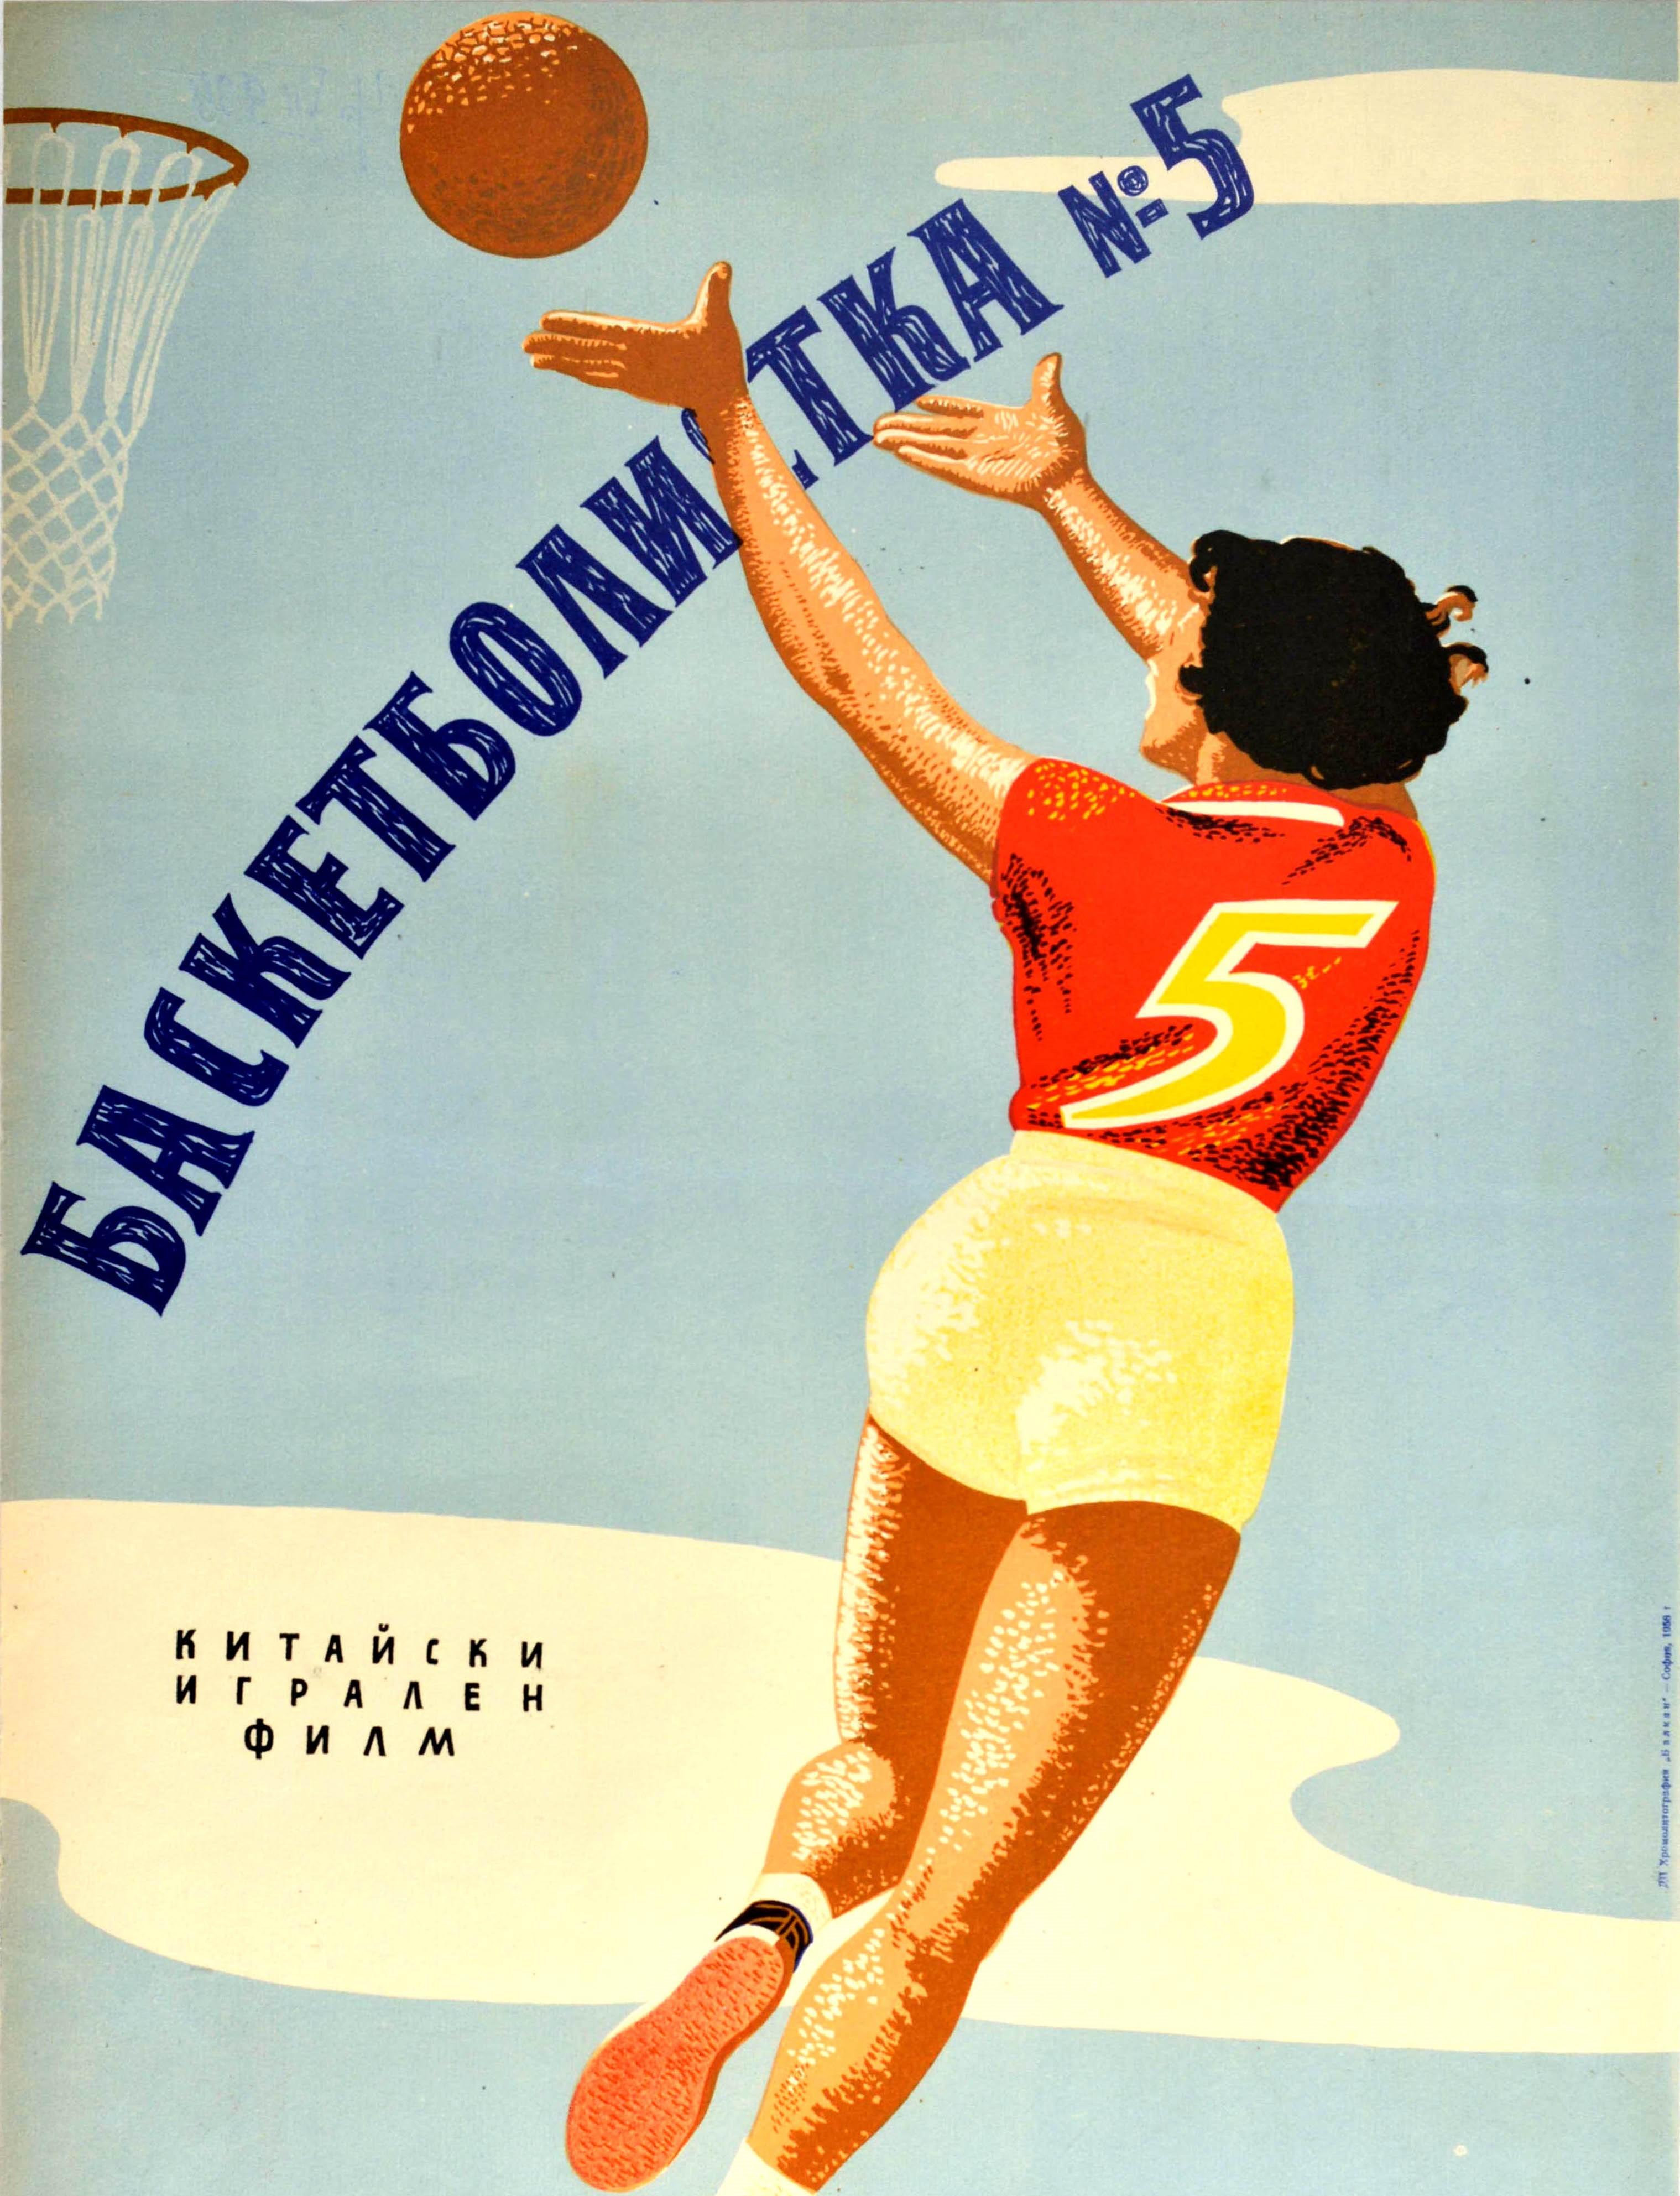 retro basketball poster